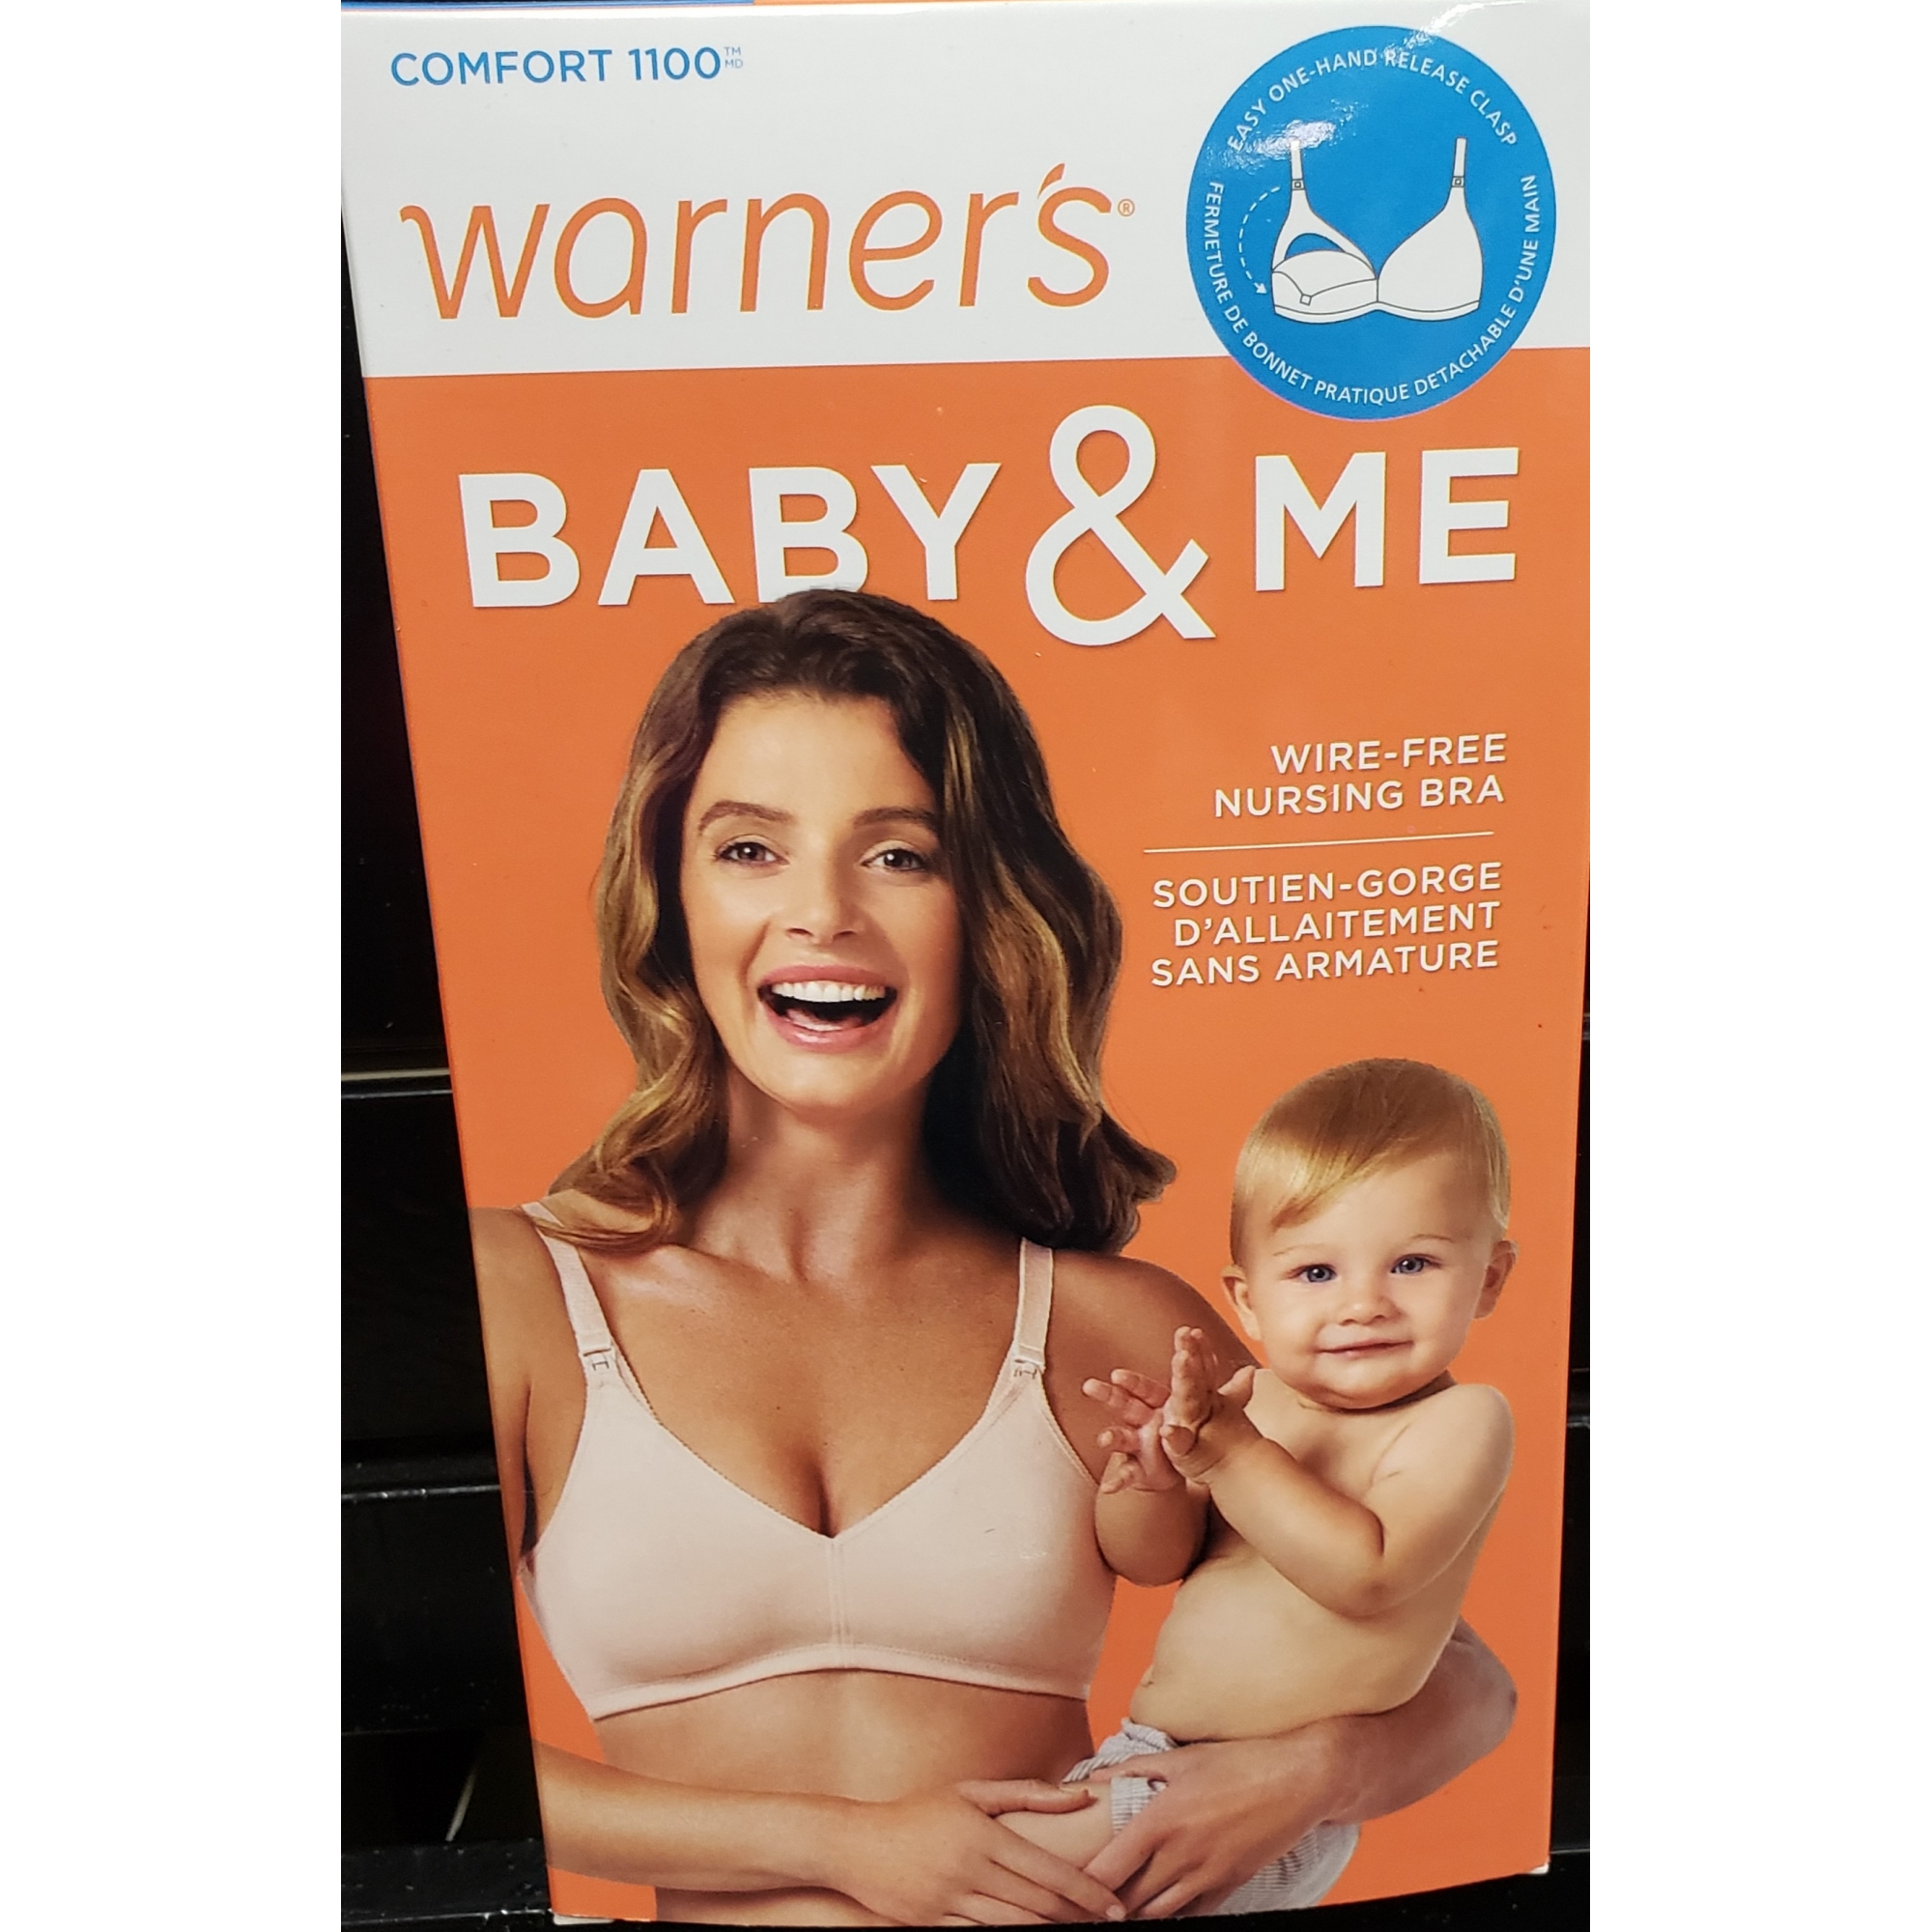 Warner's Baby and Me Nursing Bra WF 1100